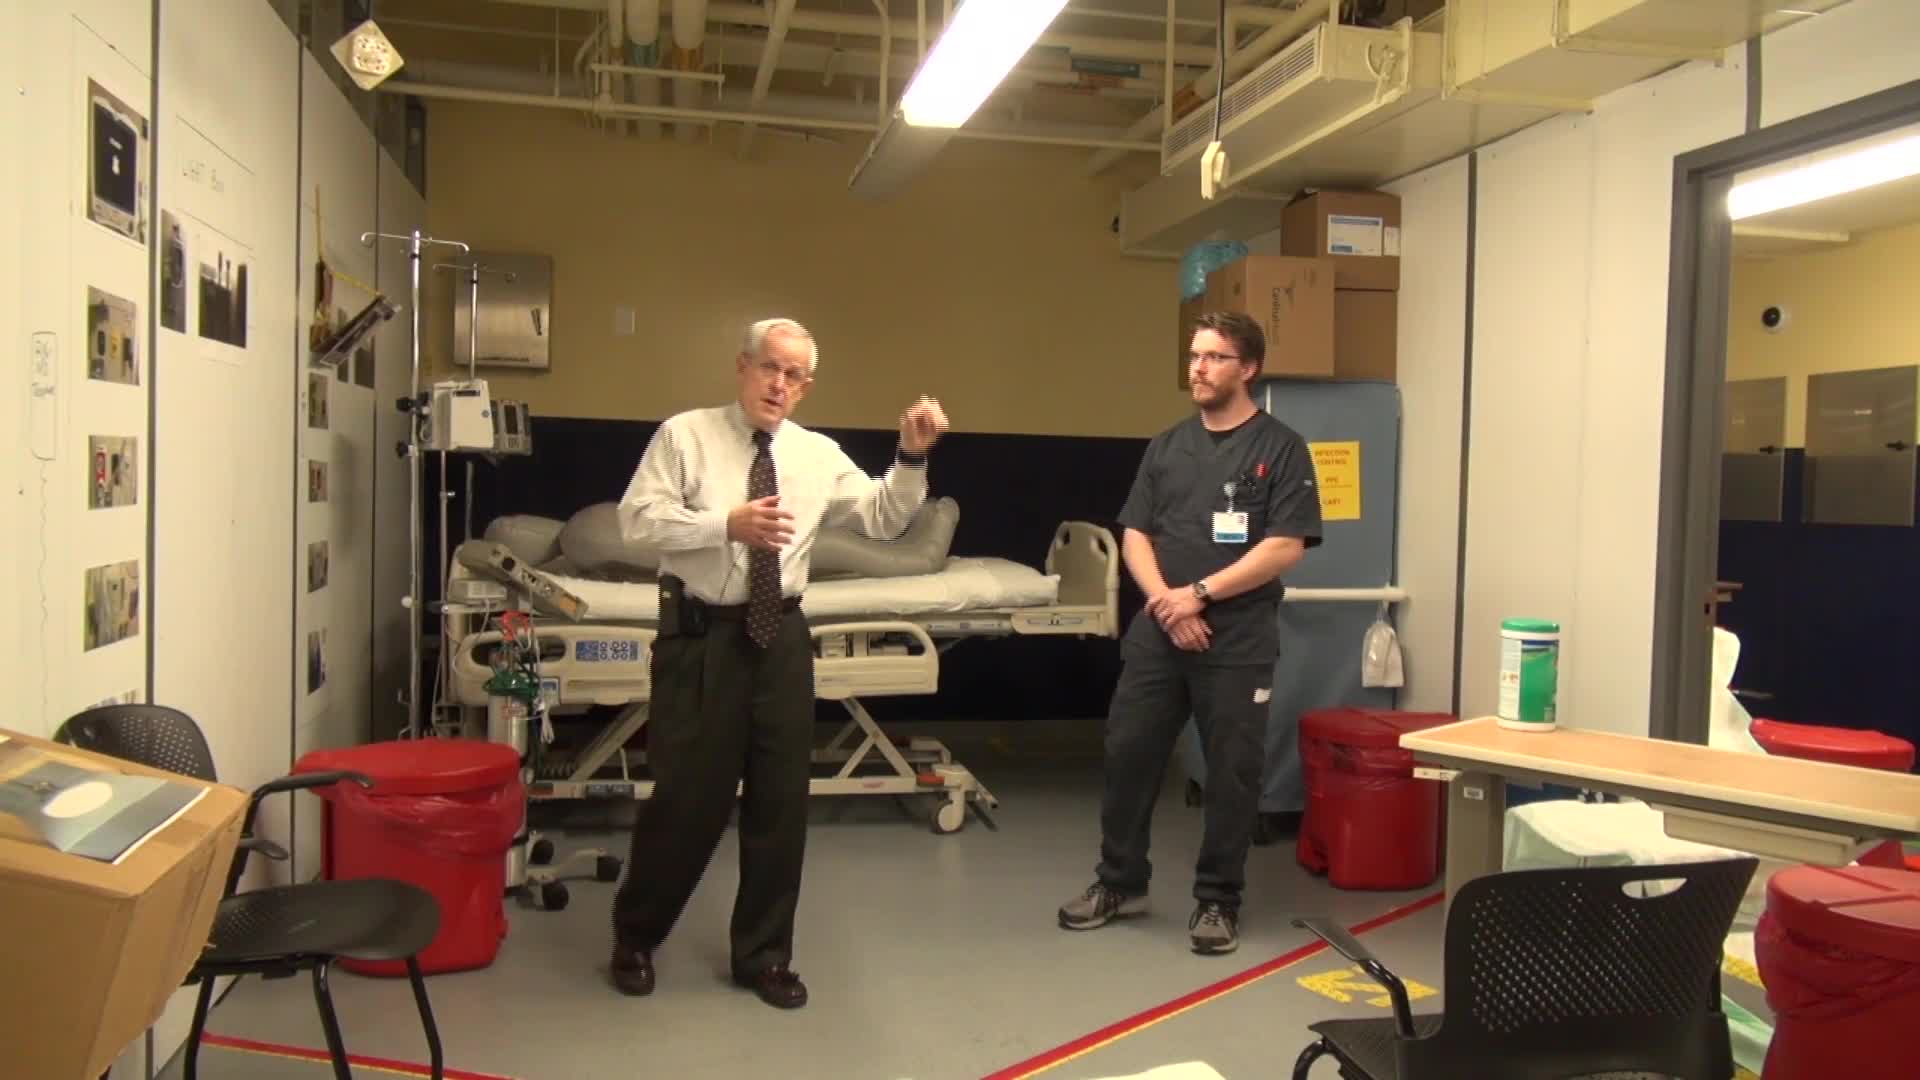 Washington-Baltimore region has six designated Ebola treatment centers (Video)